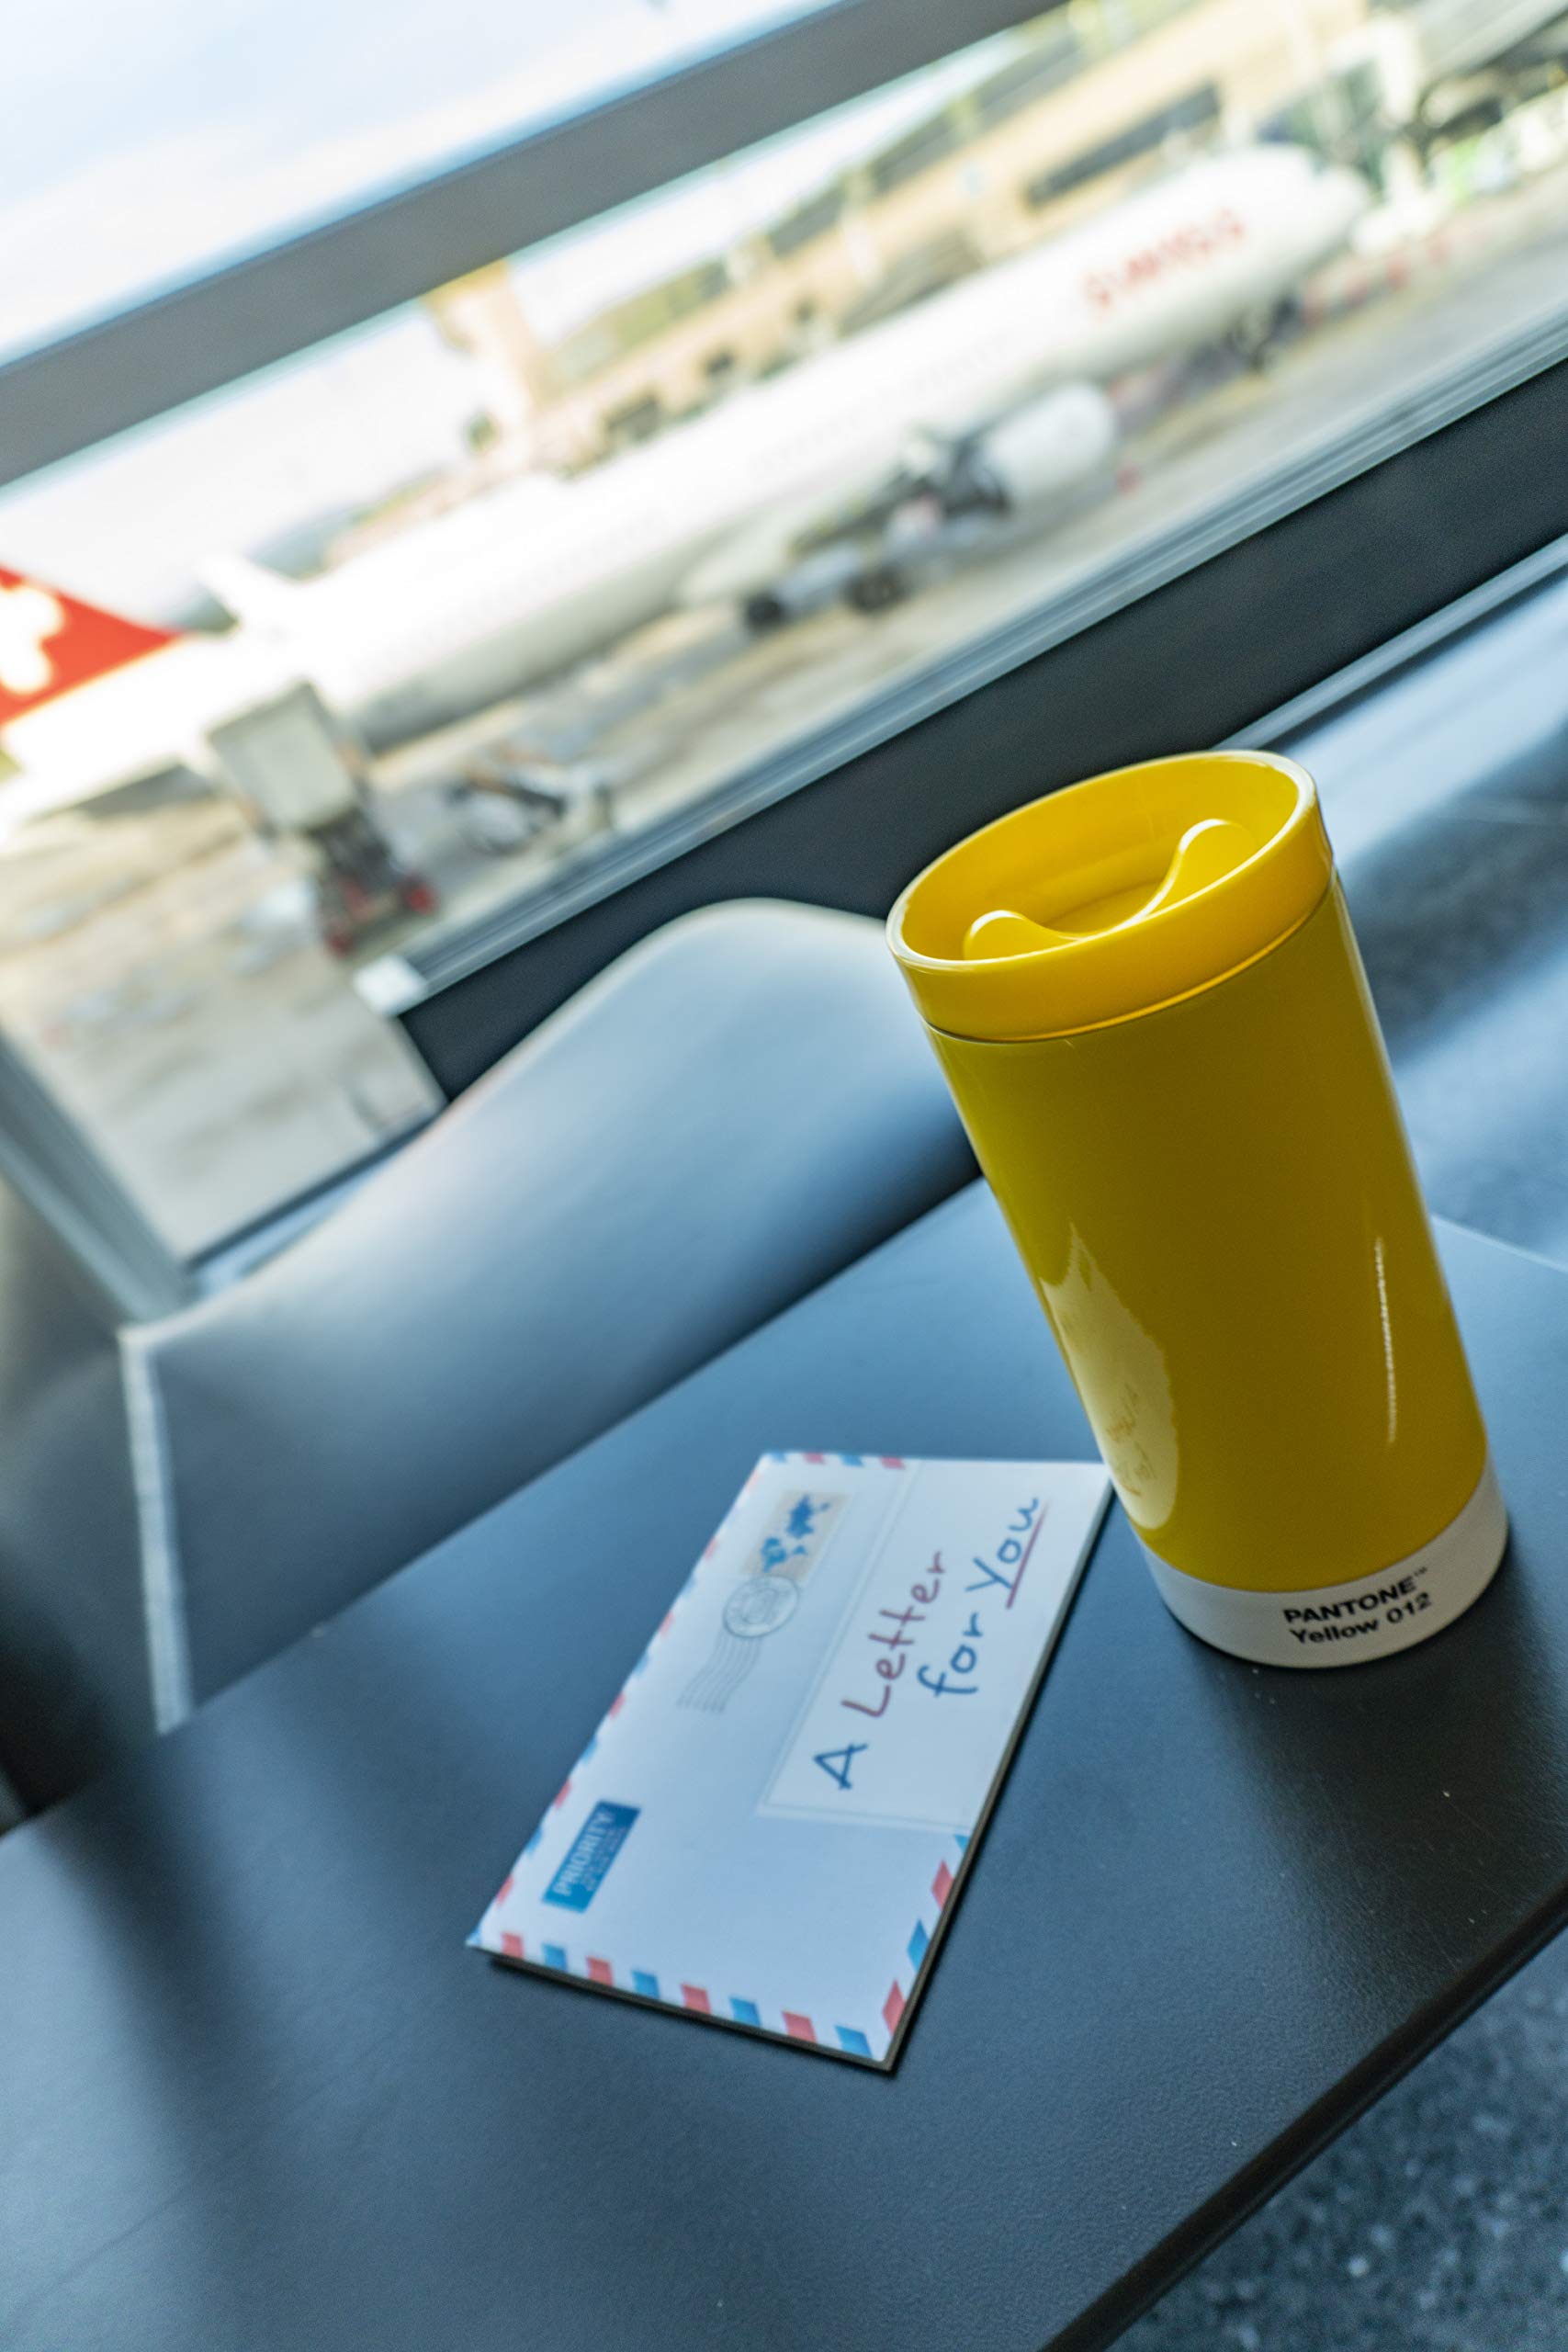 Pantone Travel Mug, Stainless Steel, ABS, Yellow 012, 7.5 x 7.5 x 16.4 cm